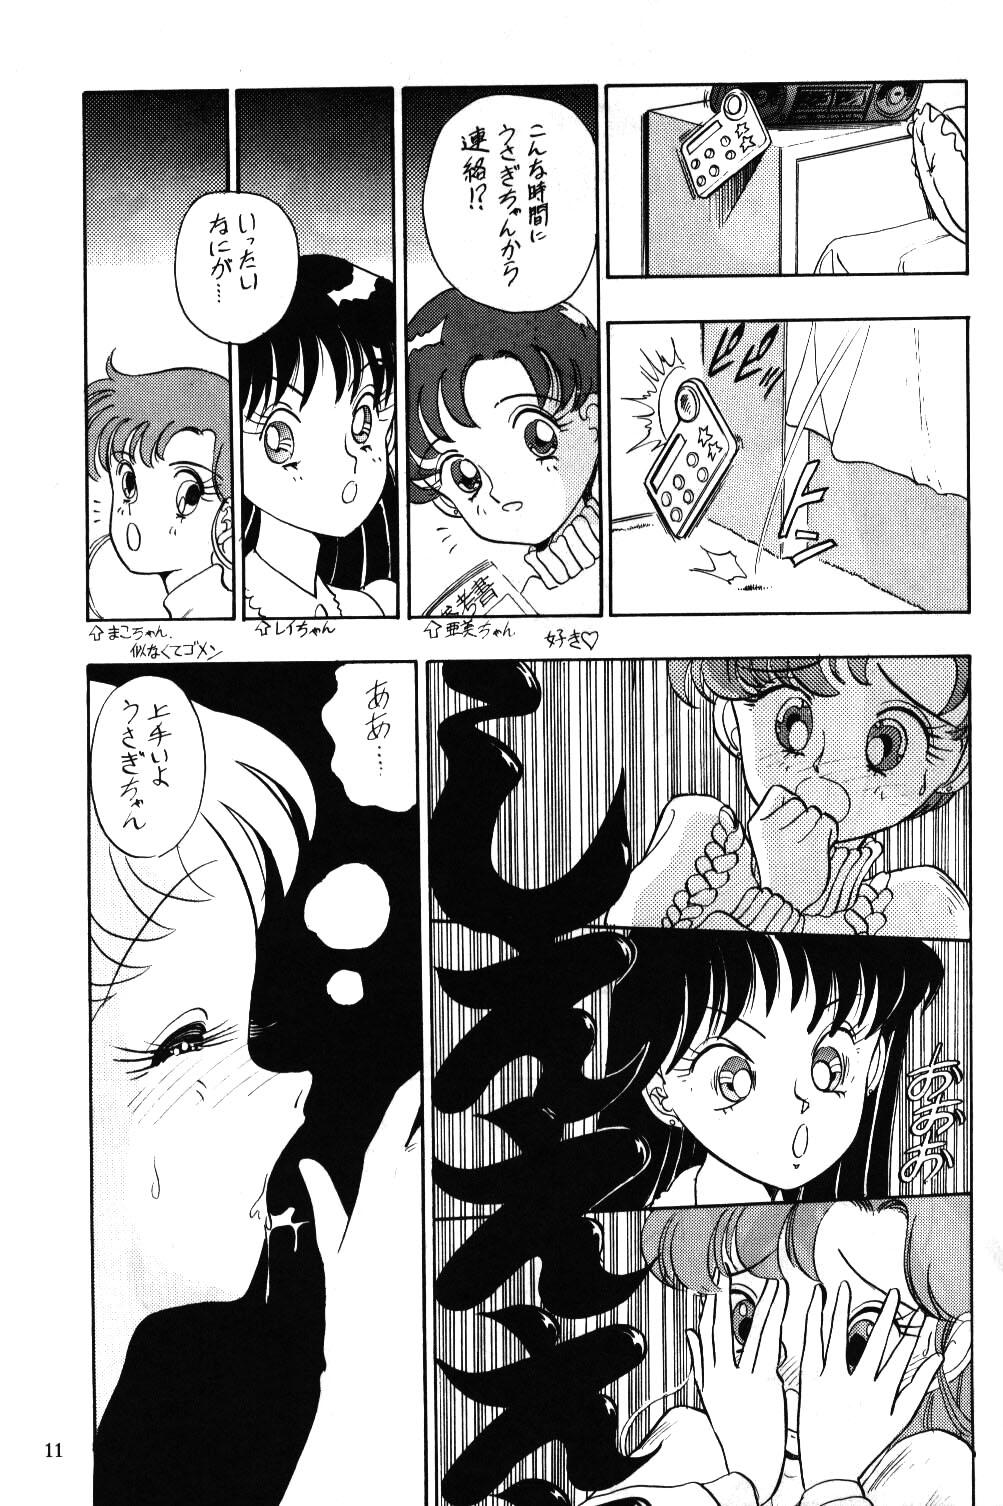 Suckingdick Air Jordan - Sailor moon Enema - Page 12